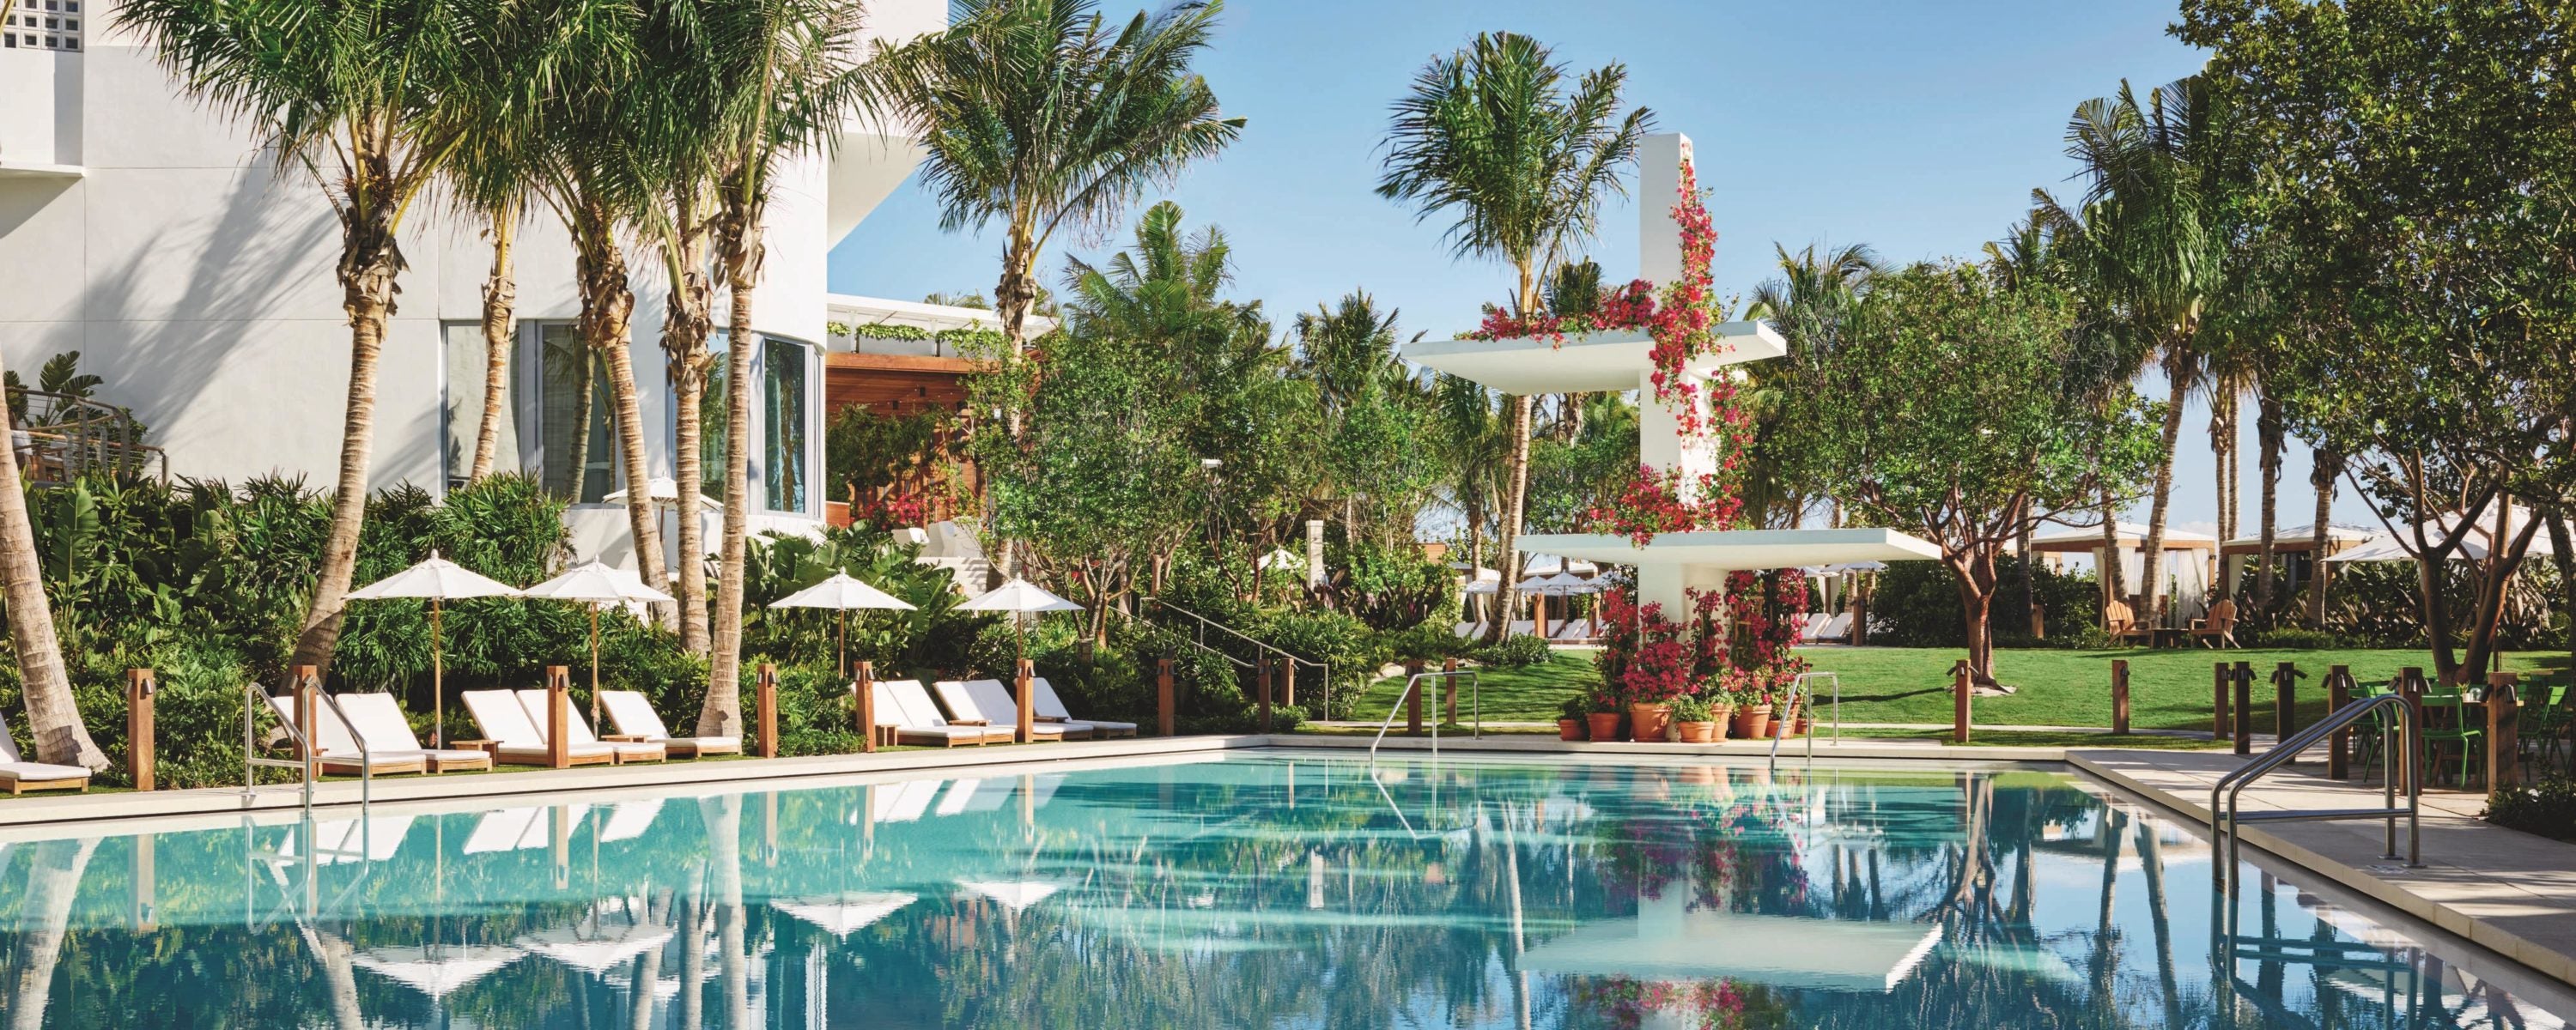 The Miami Beach EDITION pool